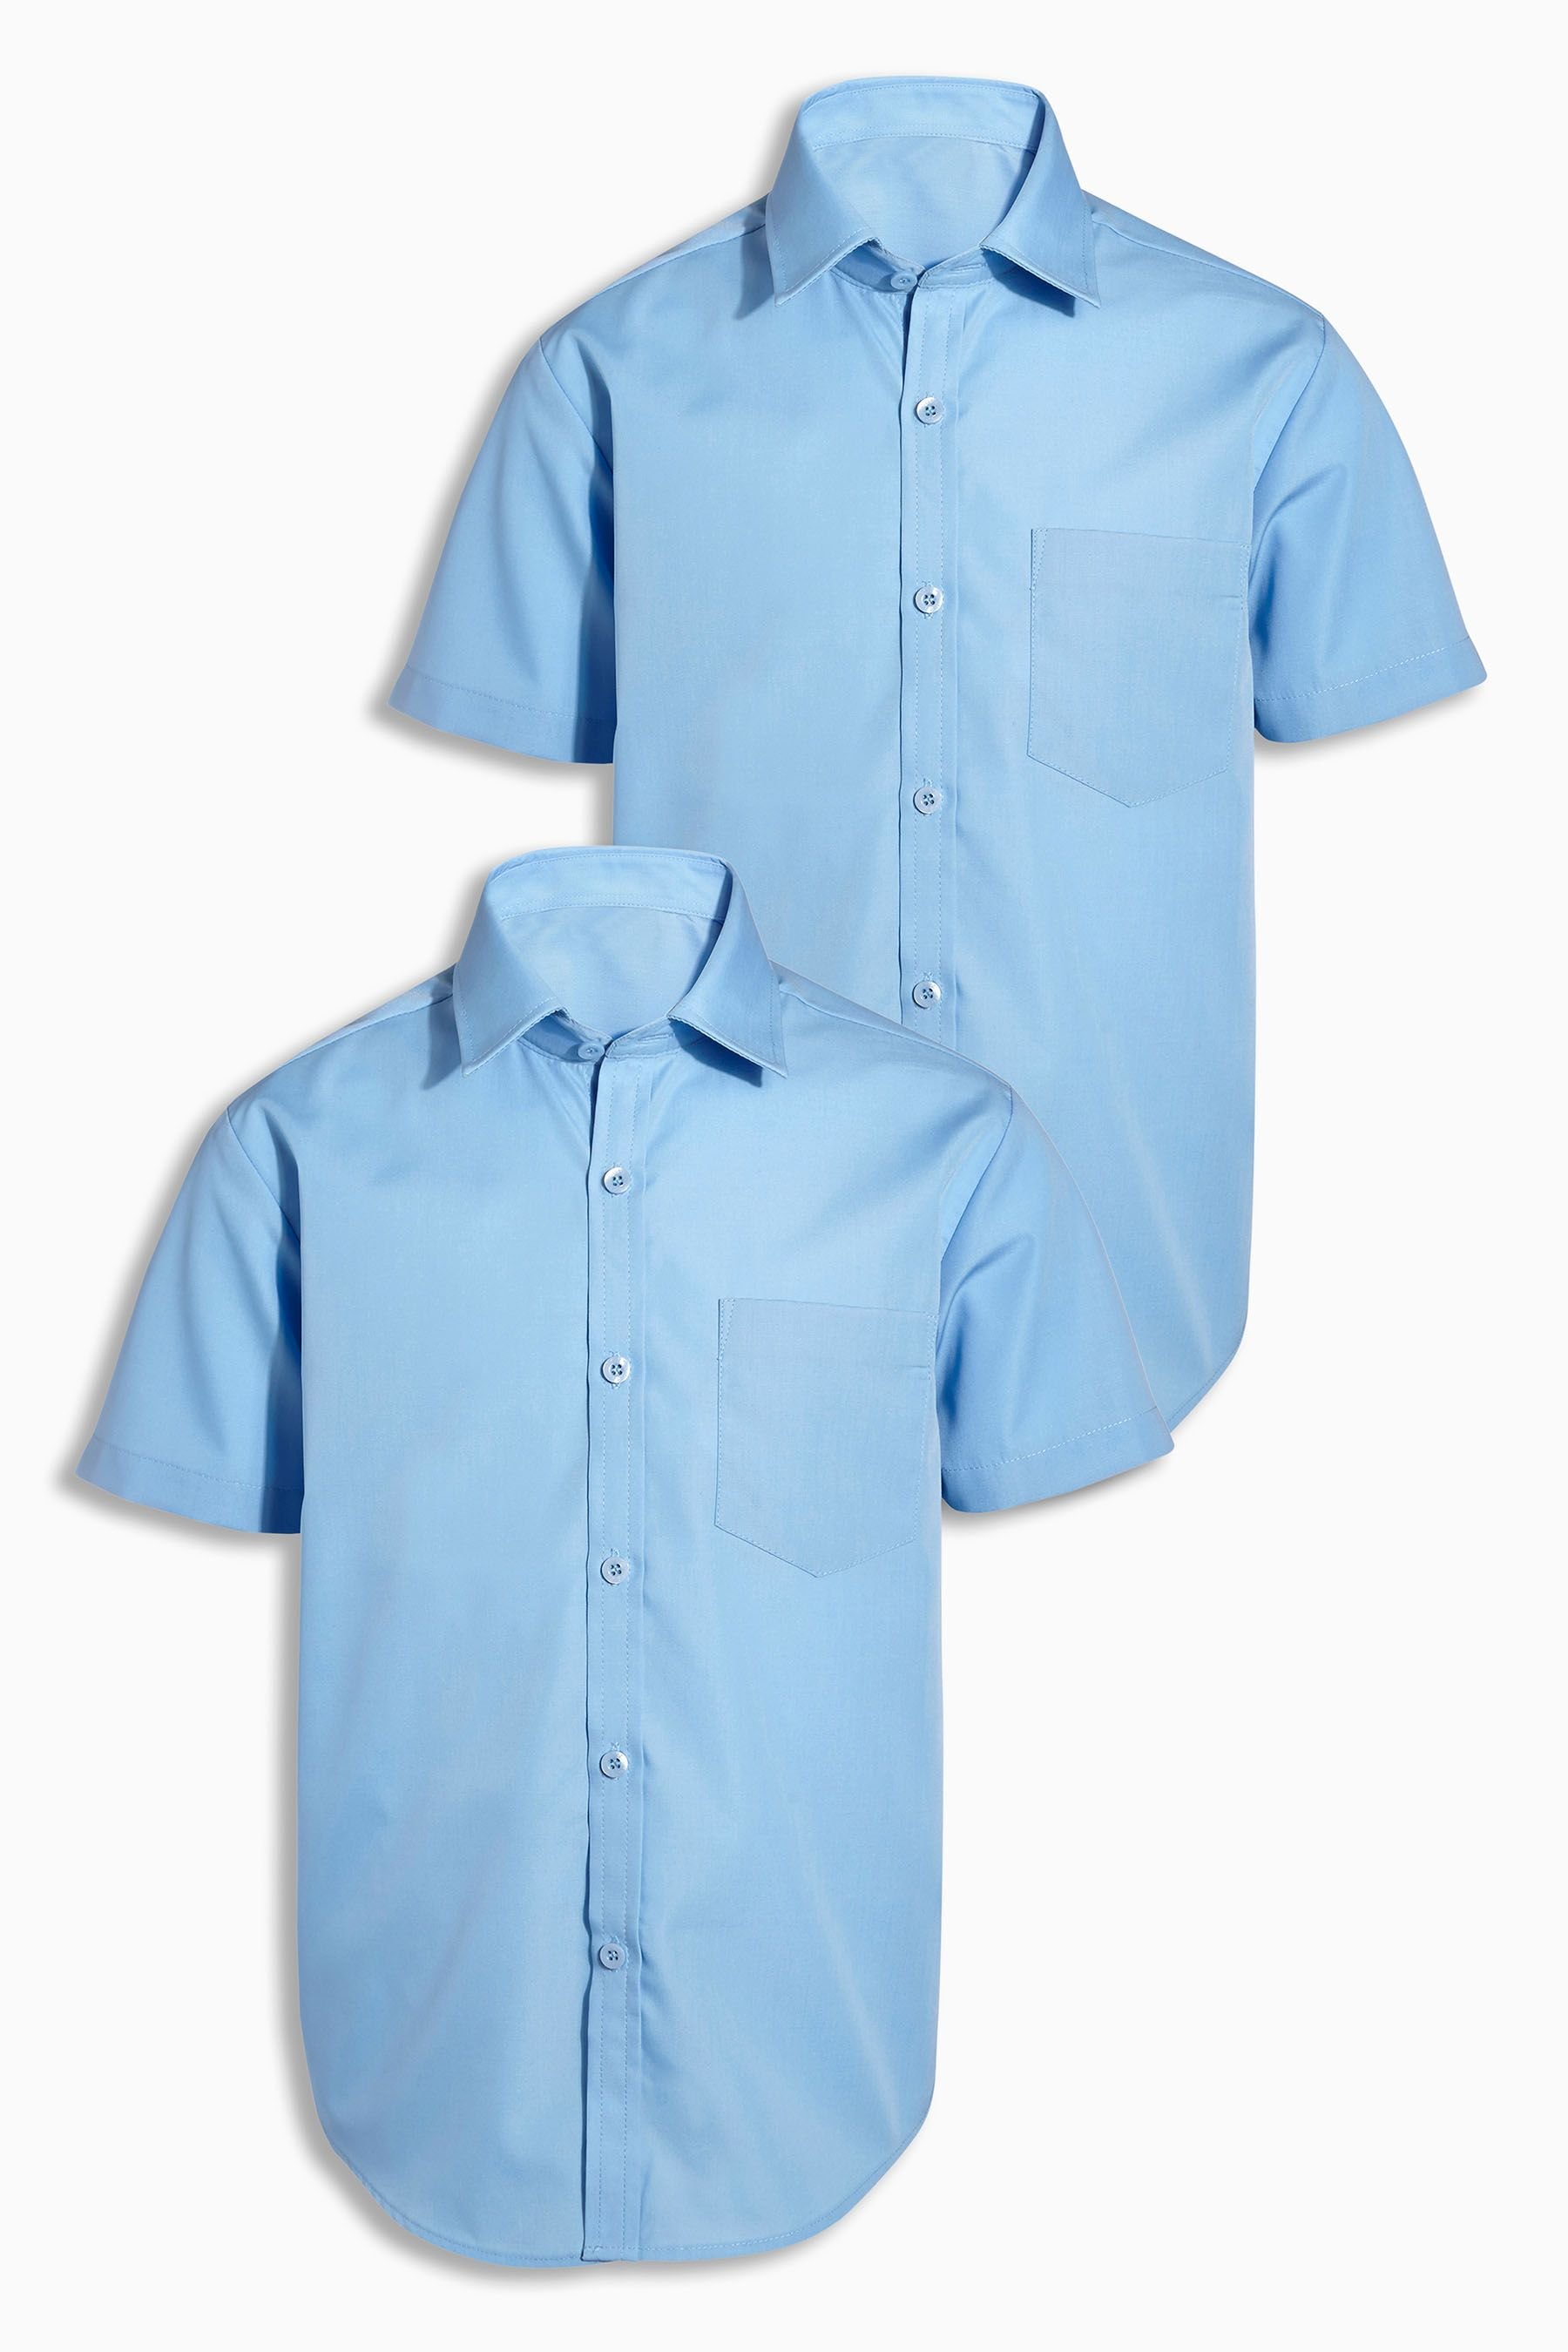 На каждой рубашке по 2. Голубые рубашки 2 рубашки. Рубашка next для мальчика. Рубашка Некст для мальчика. Комплект из 2 рубашек next.